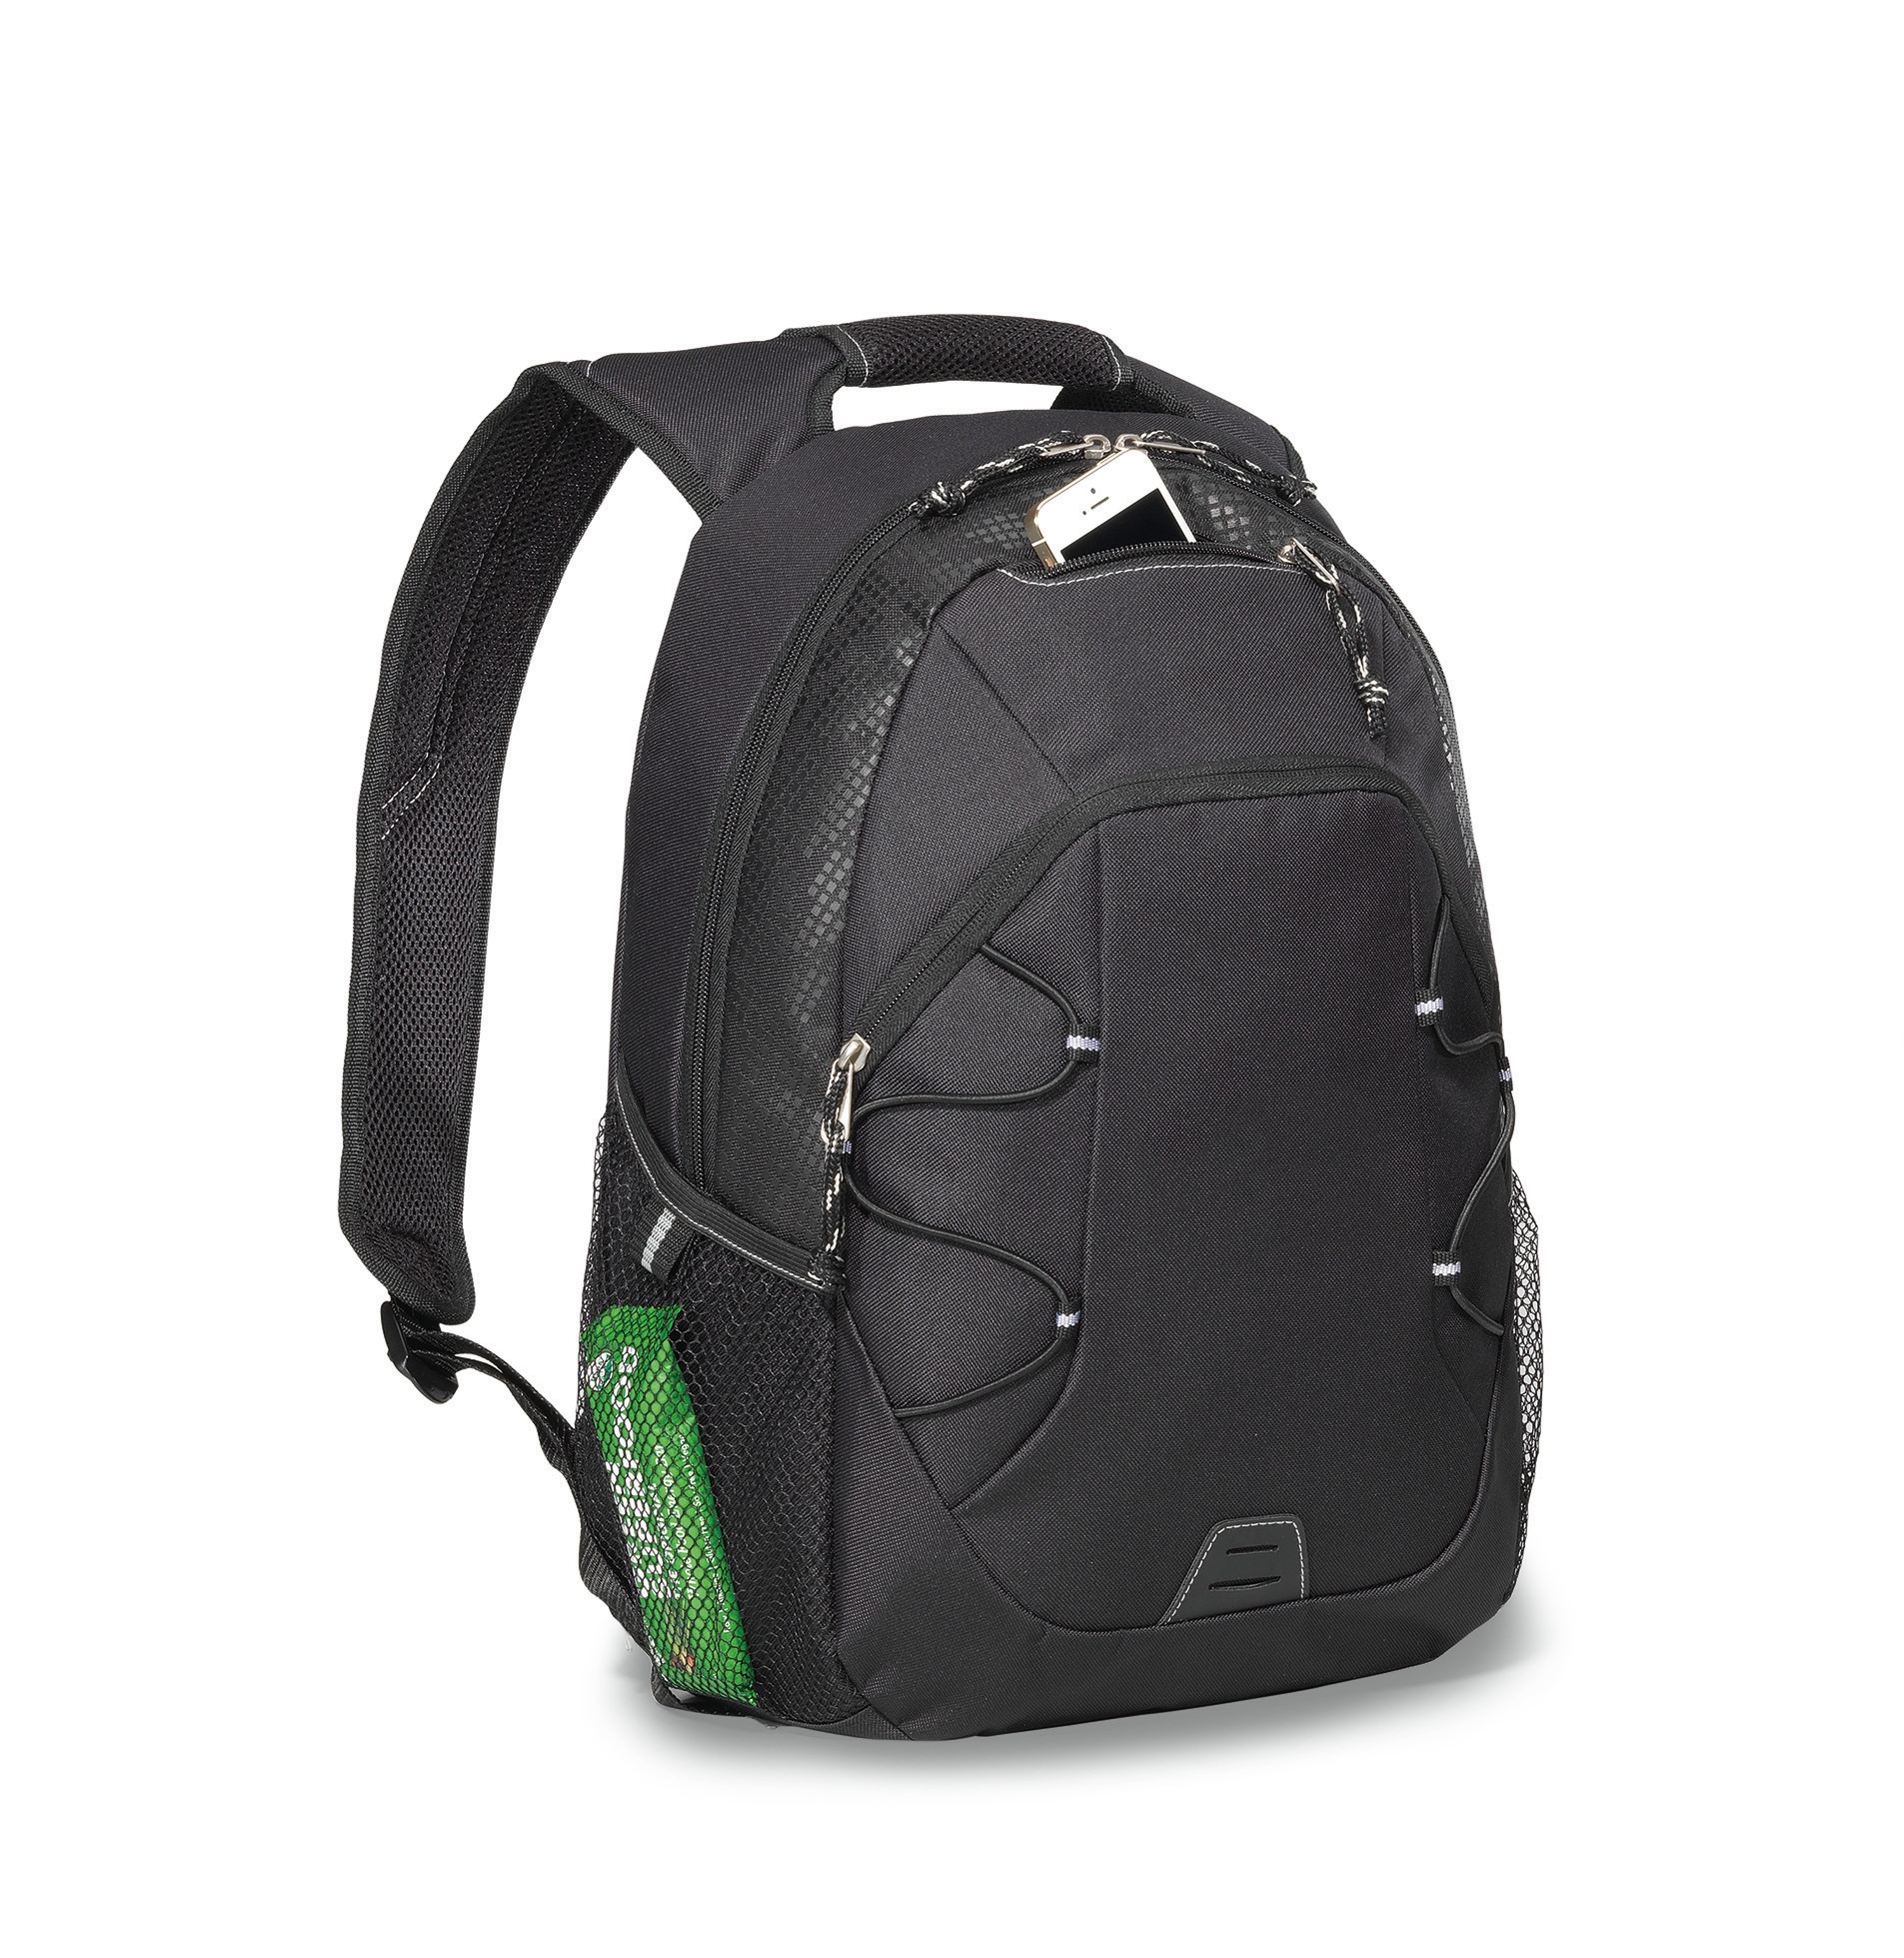 Gemline 5195 - Matrix Computer Backpack $31.54 - Bags